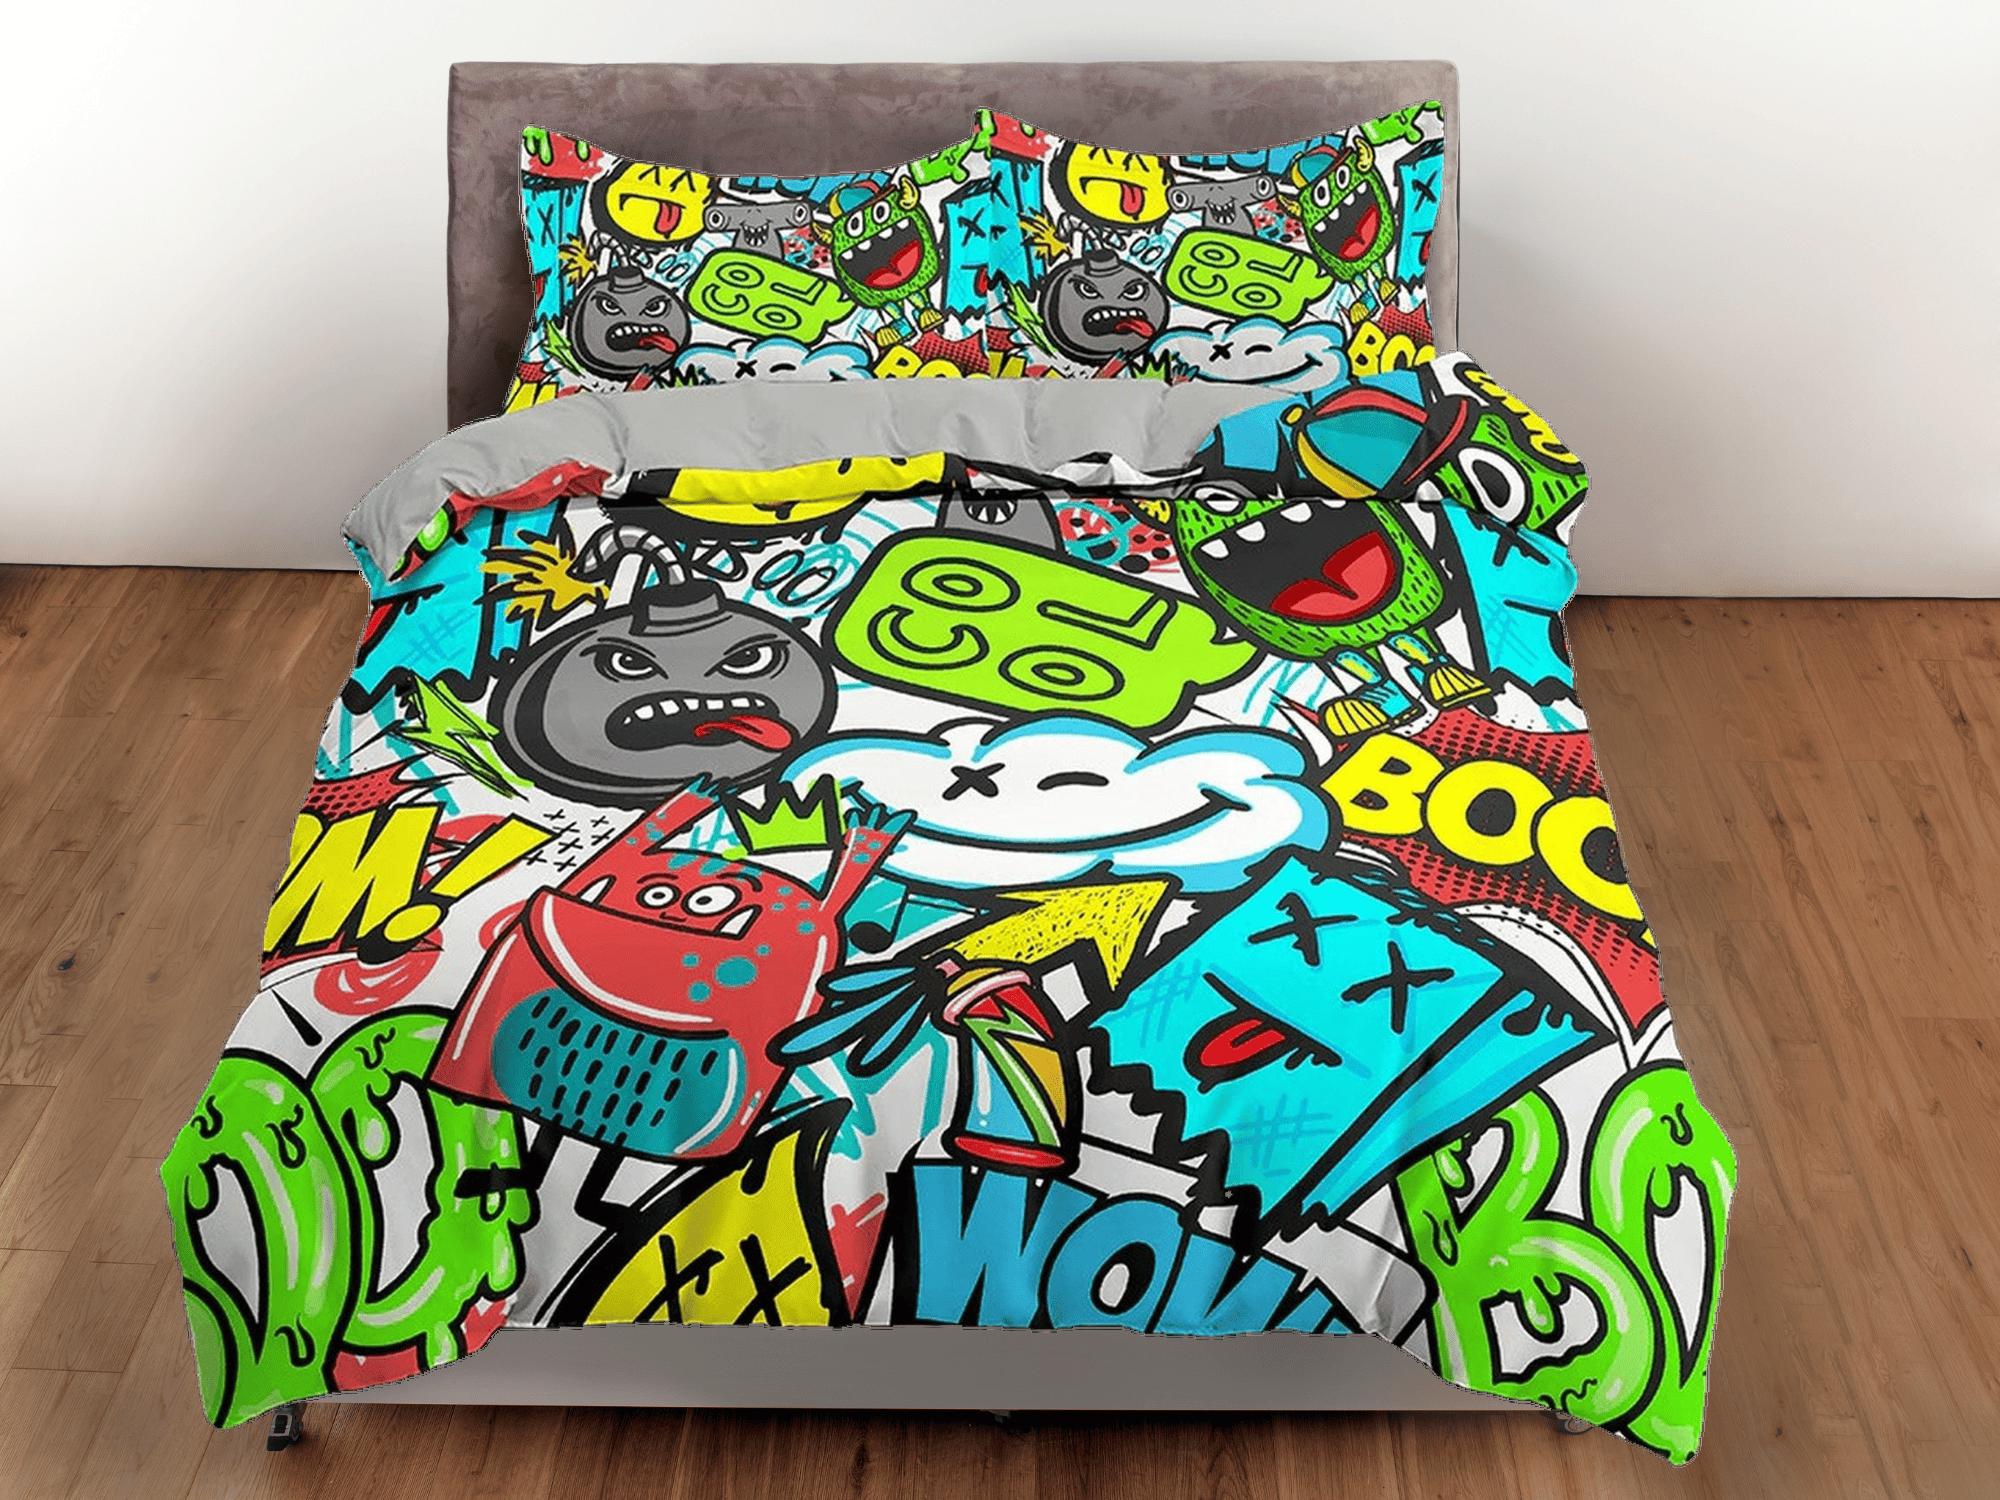 daintyduvet Colorful Doodles Street Art Bedding, Duvet Cover & Pillowcase, Zipper Bedding, Dorm Bedding, Teens Adult Duvet King Queen Full Twin Single